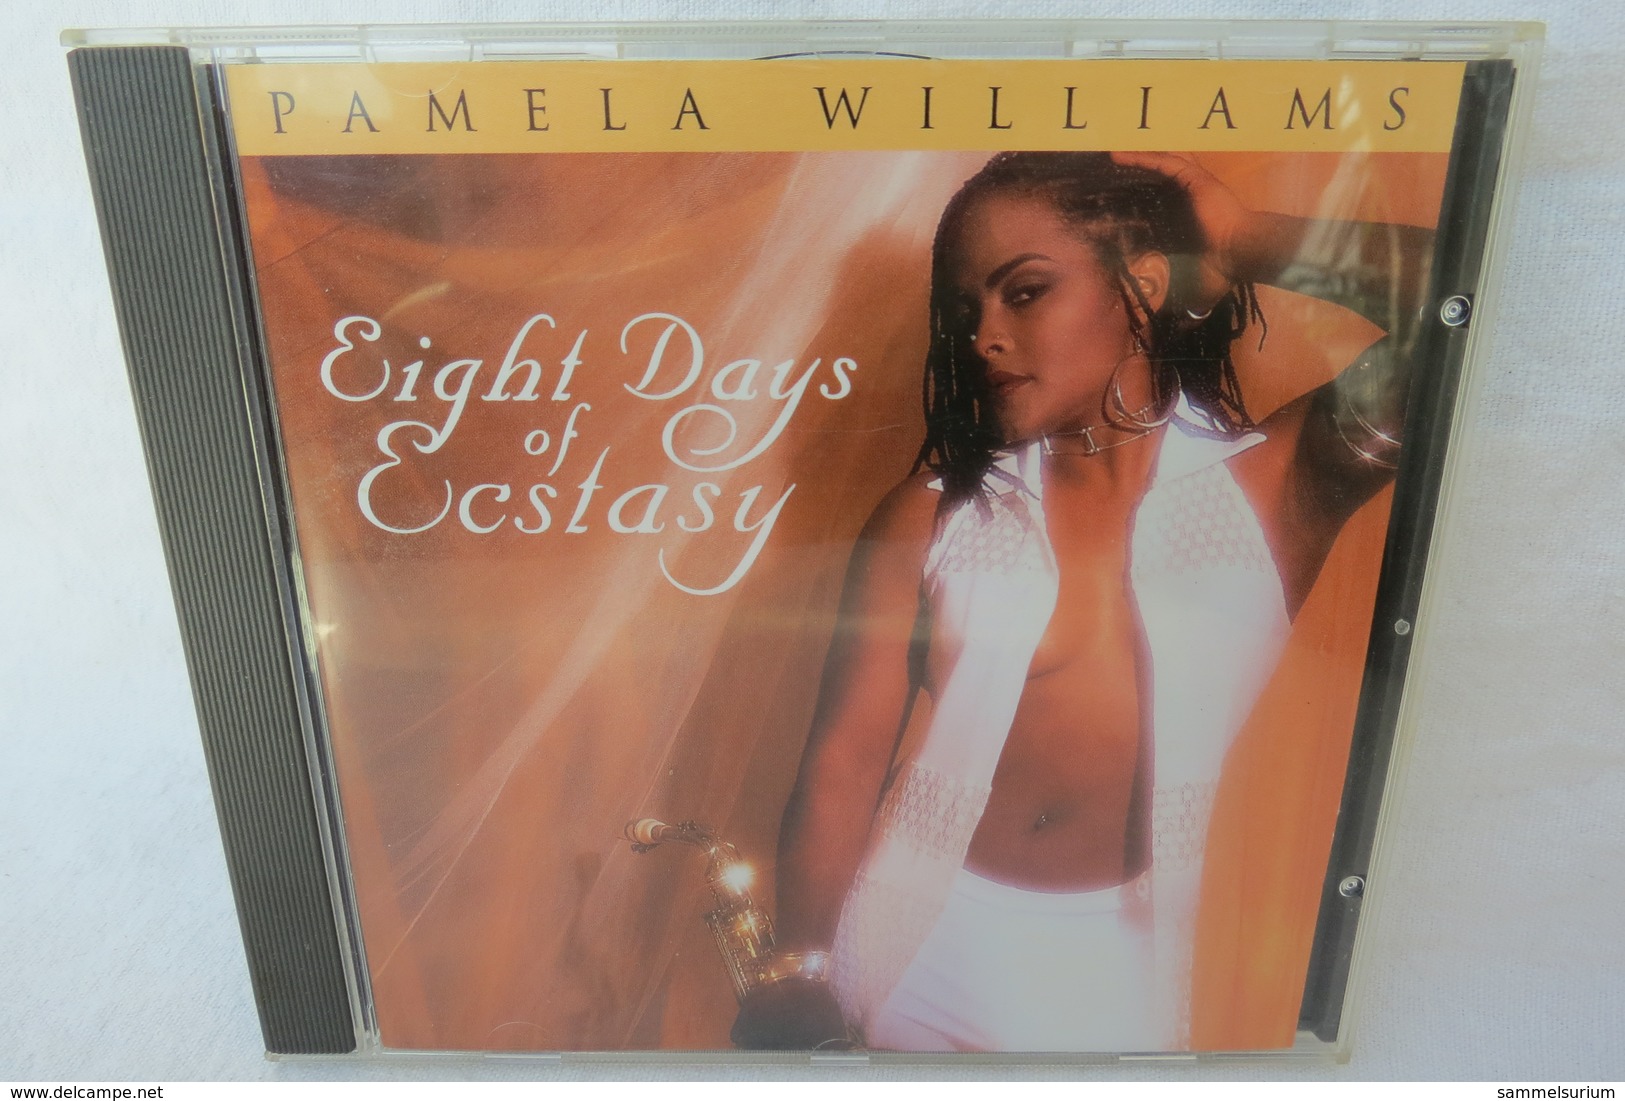 CD "Pamela Williams" Eight Days Of Ecstasy - Jazz